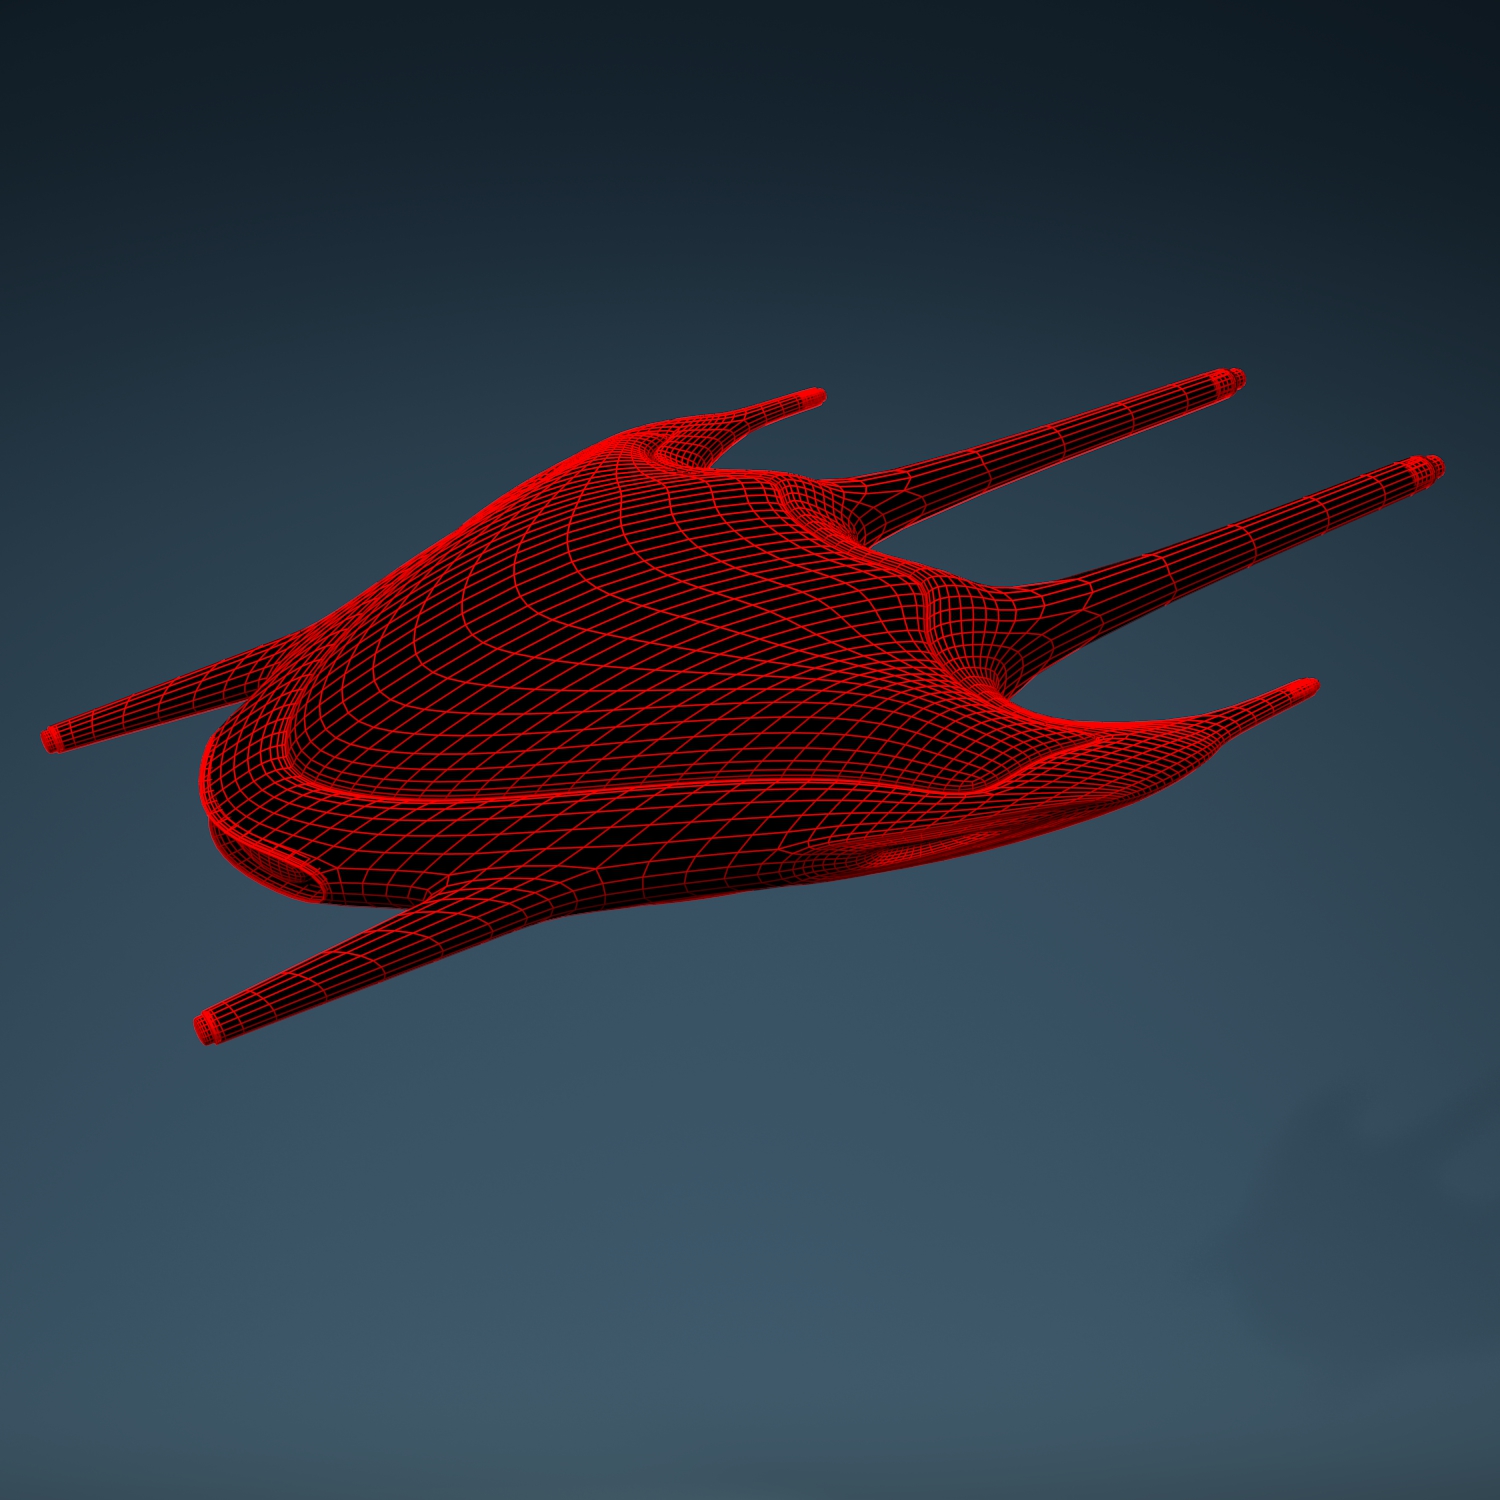 ship ziso #starblast #blender - 3D model by Ali-Ghaway (@ali